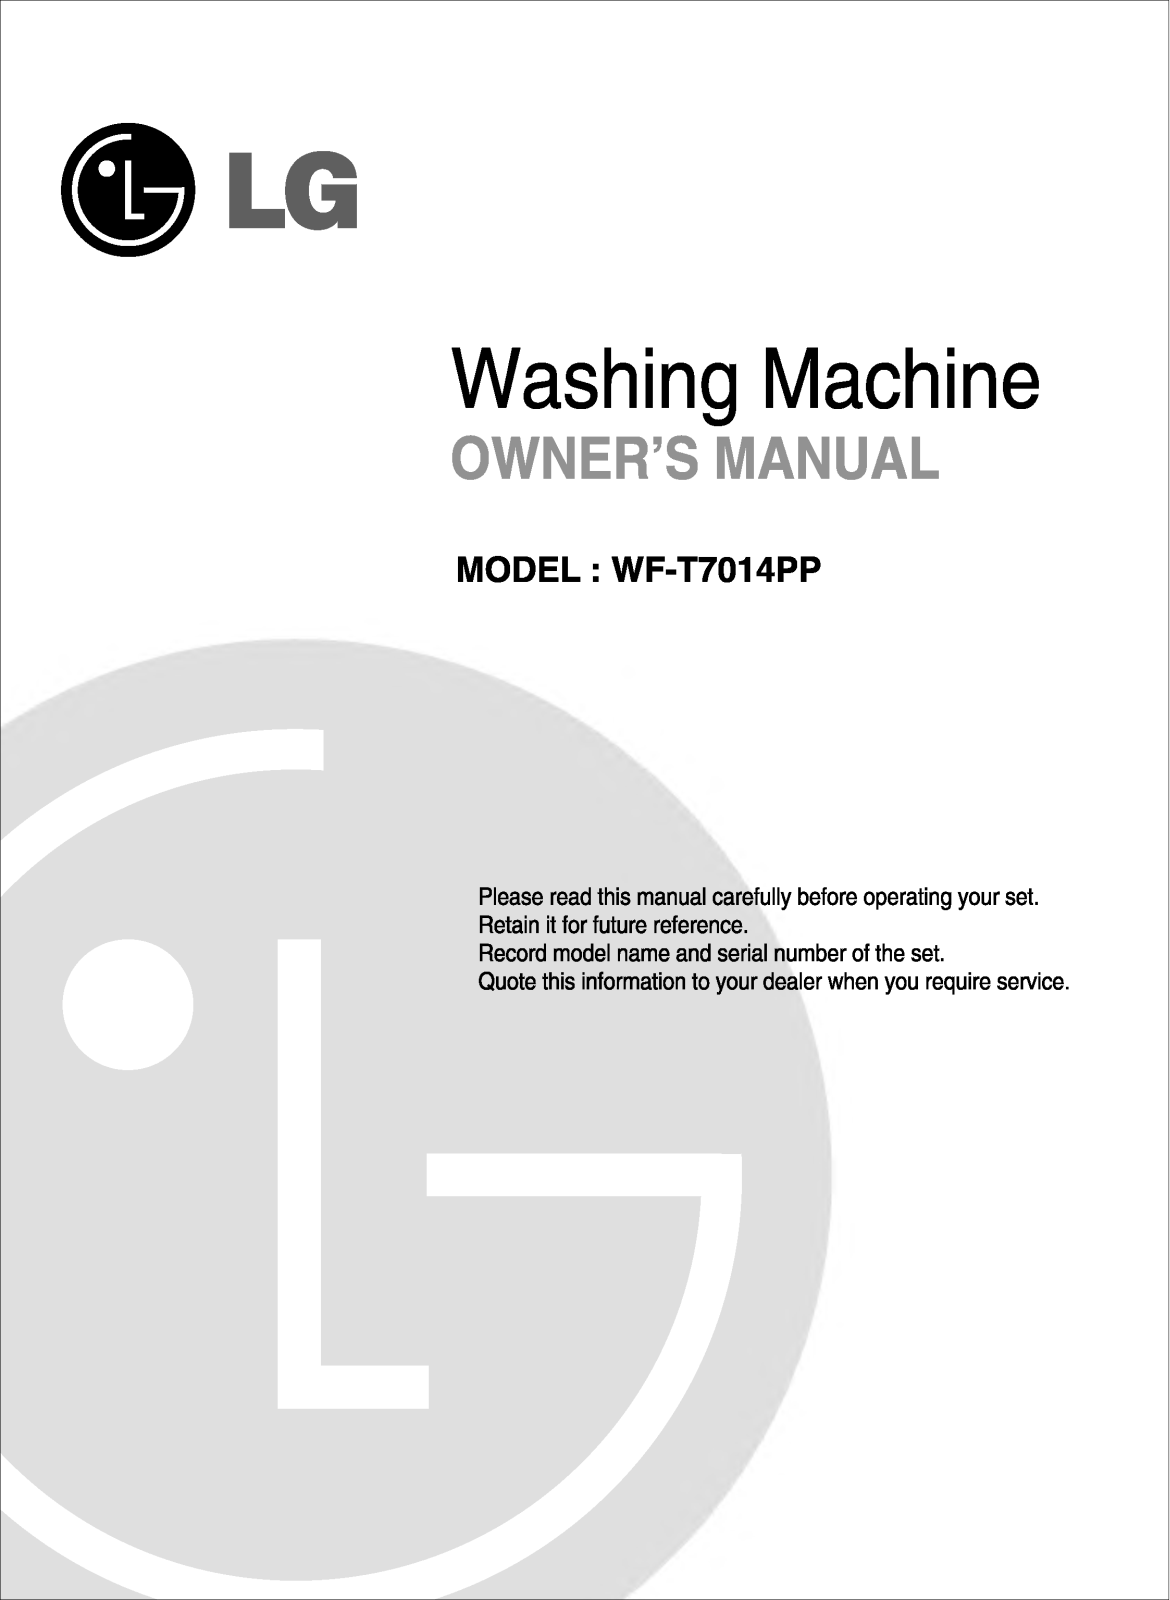 LG WF-T7050TP Manual